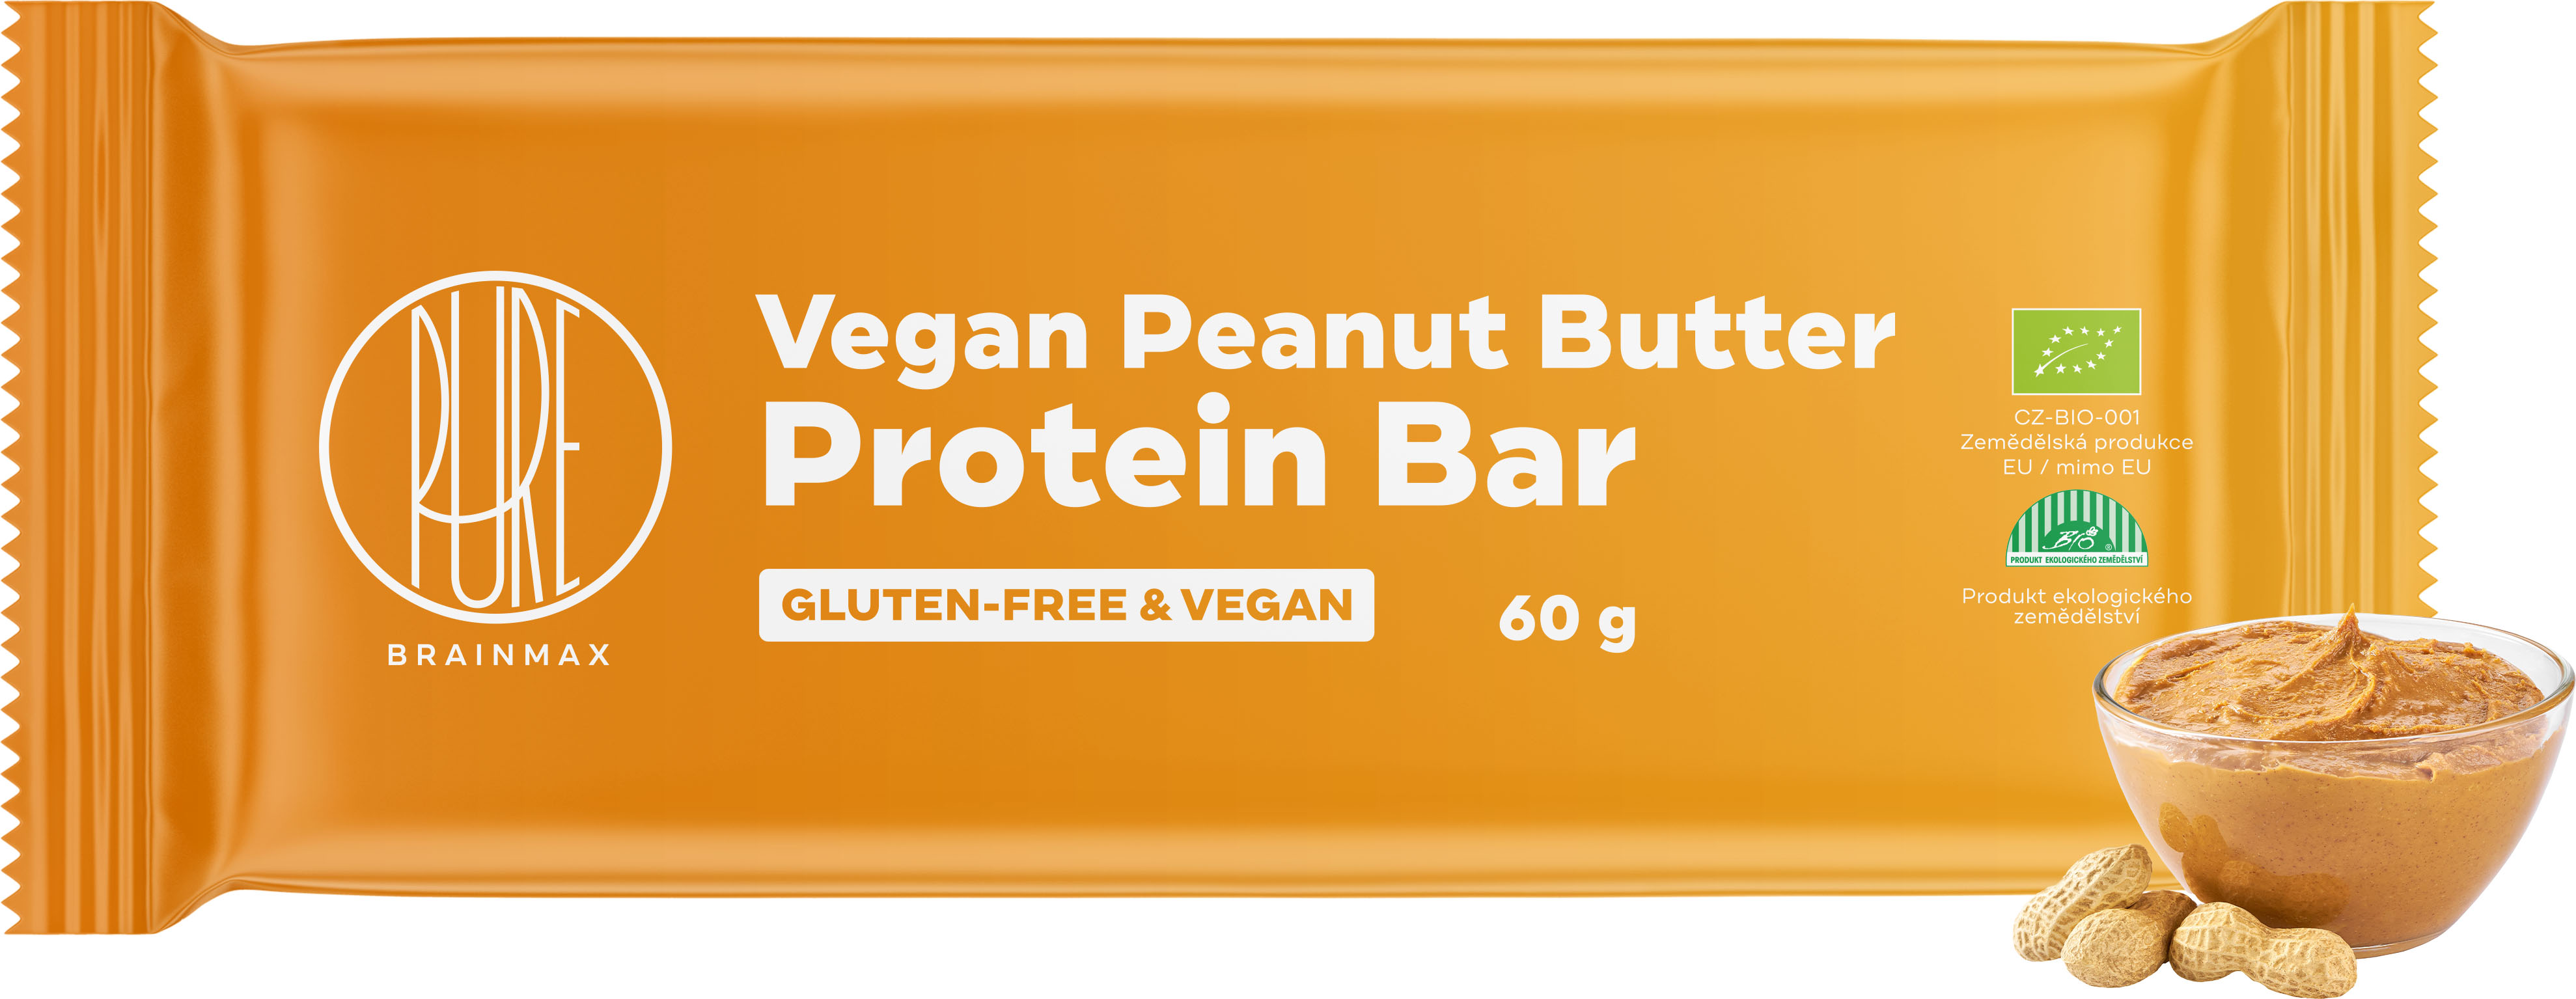 BrainMax Pure Vegan Peanut Butter Protein Bar, Veganská proteinová tyčinka, Arašídové máslo, BIO, 60 g *CZ-BIO-001 certifikát